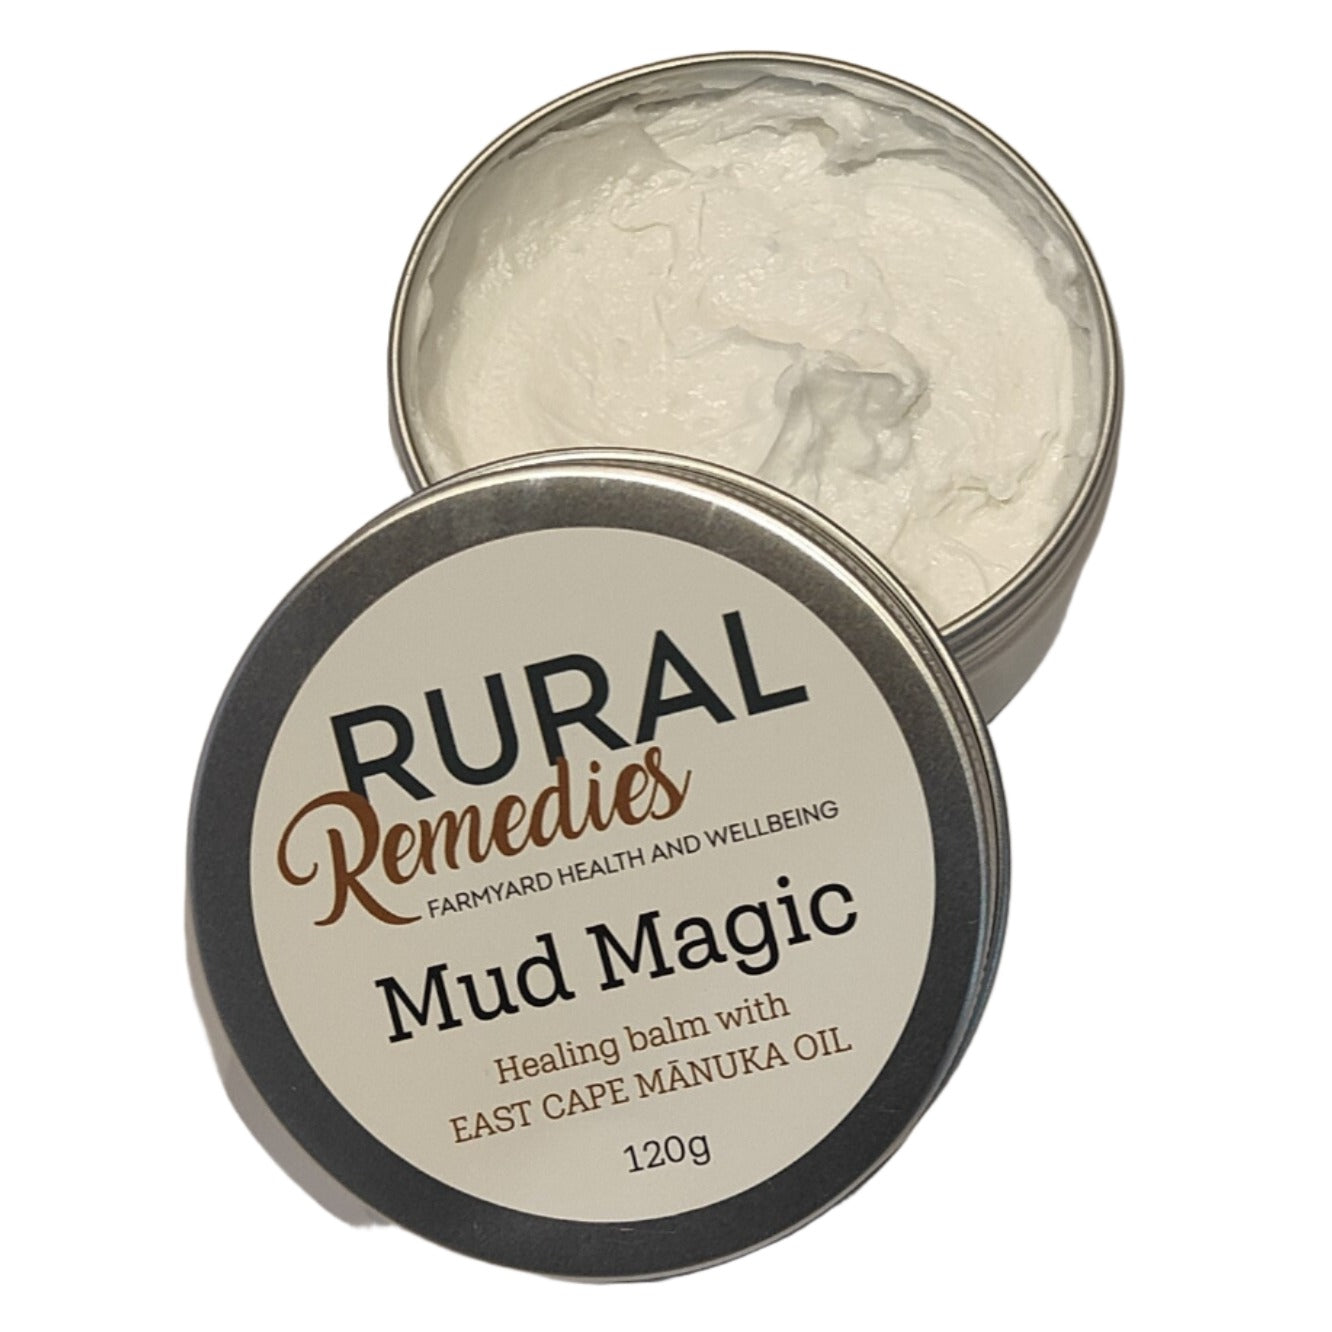 Rural Remedies Mud Magic Healing Balm